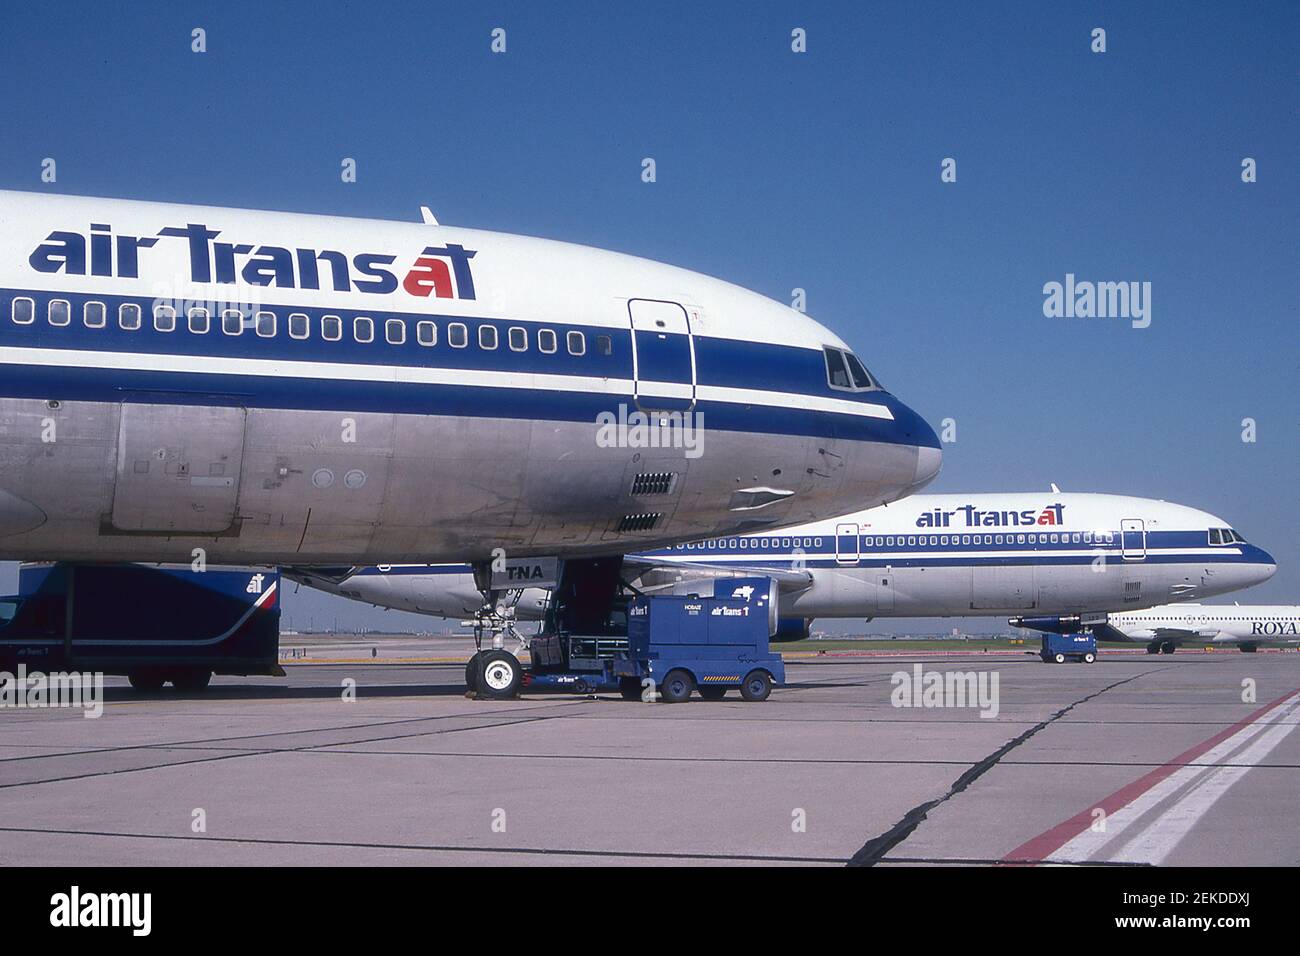 AIR TRANSAT LOCKHEED L-1011 TRISTARS AT TORONTO. Stock Photo